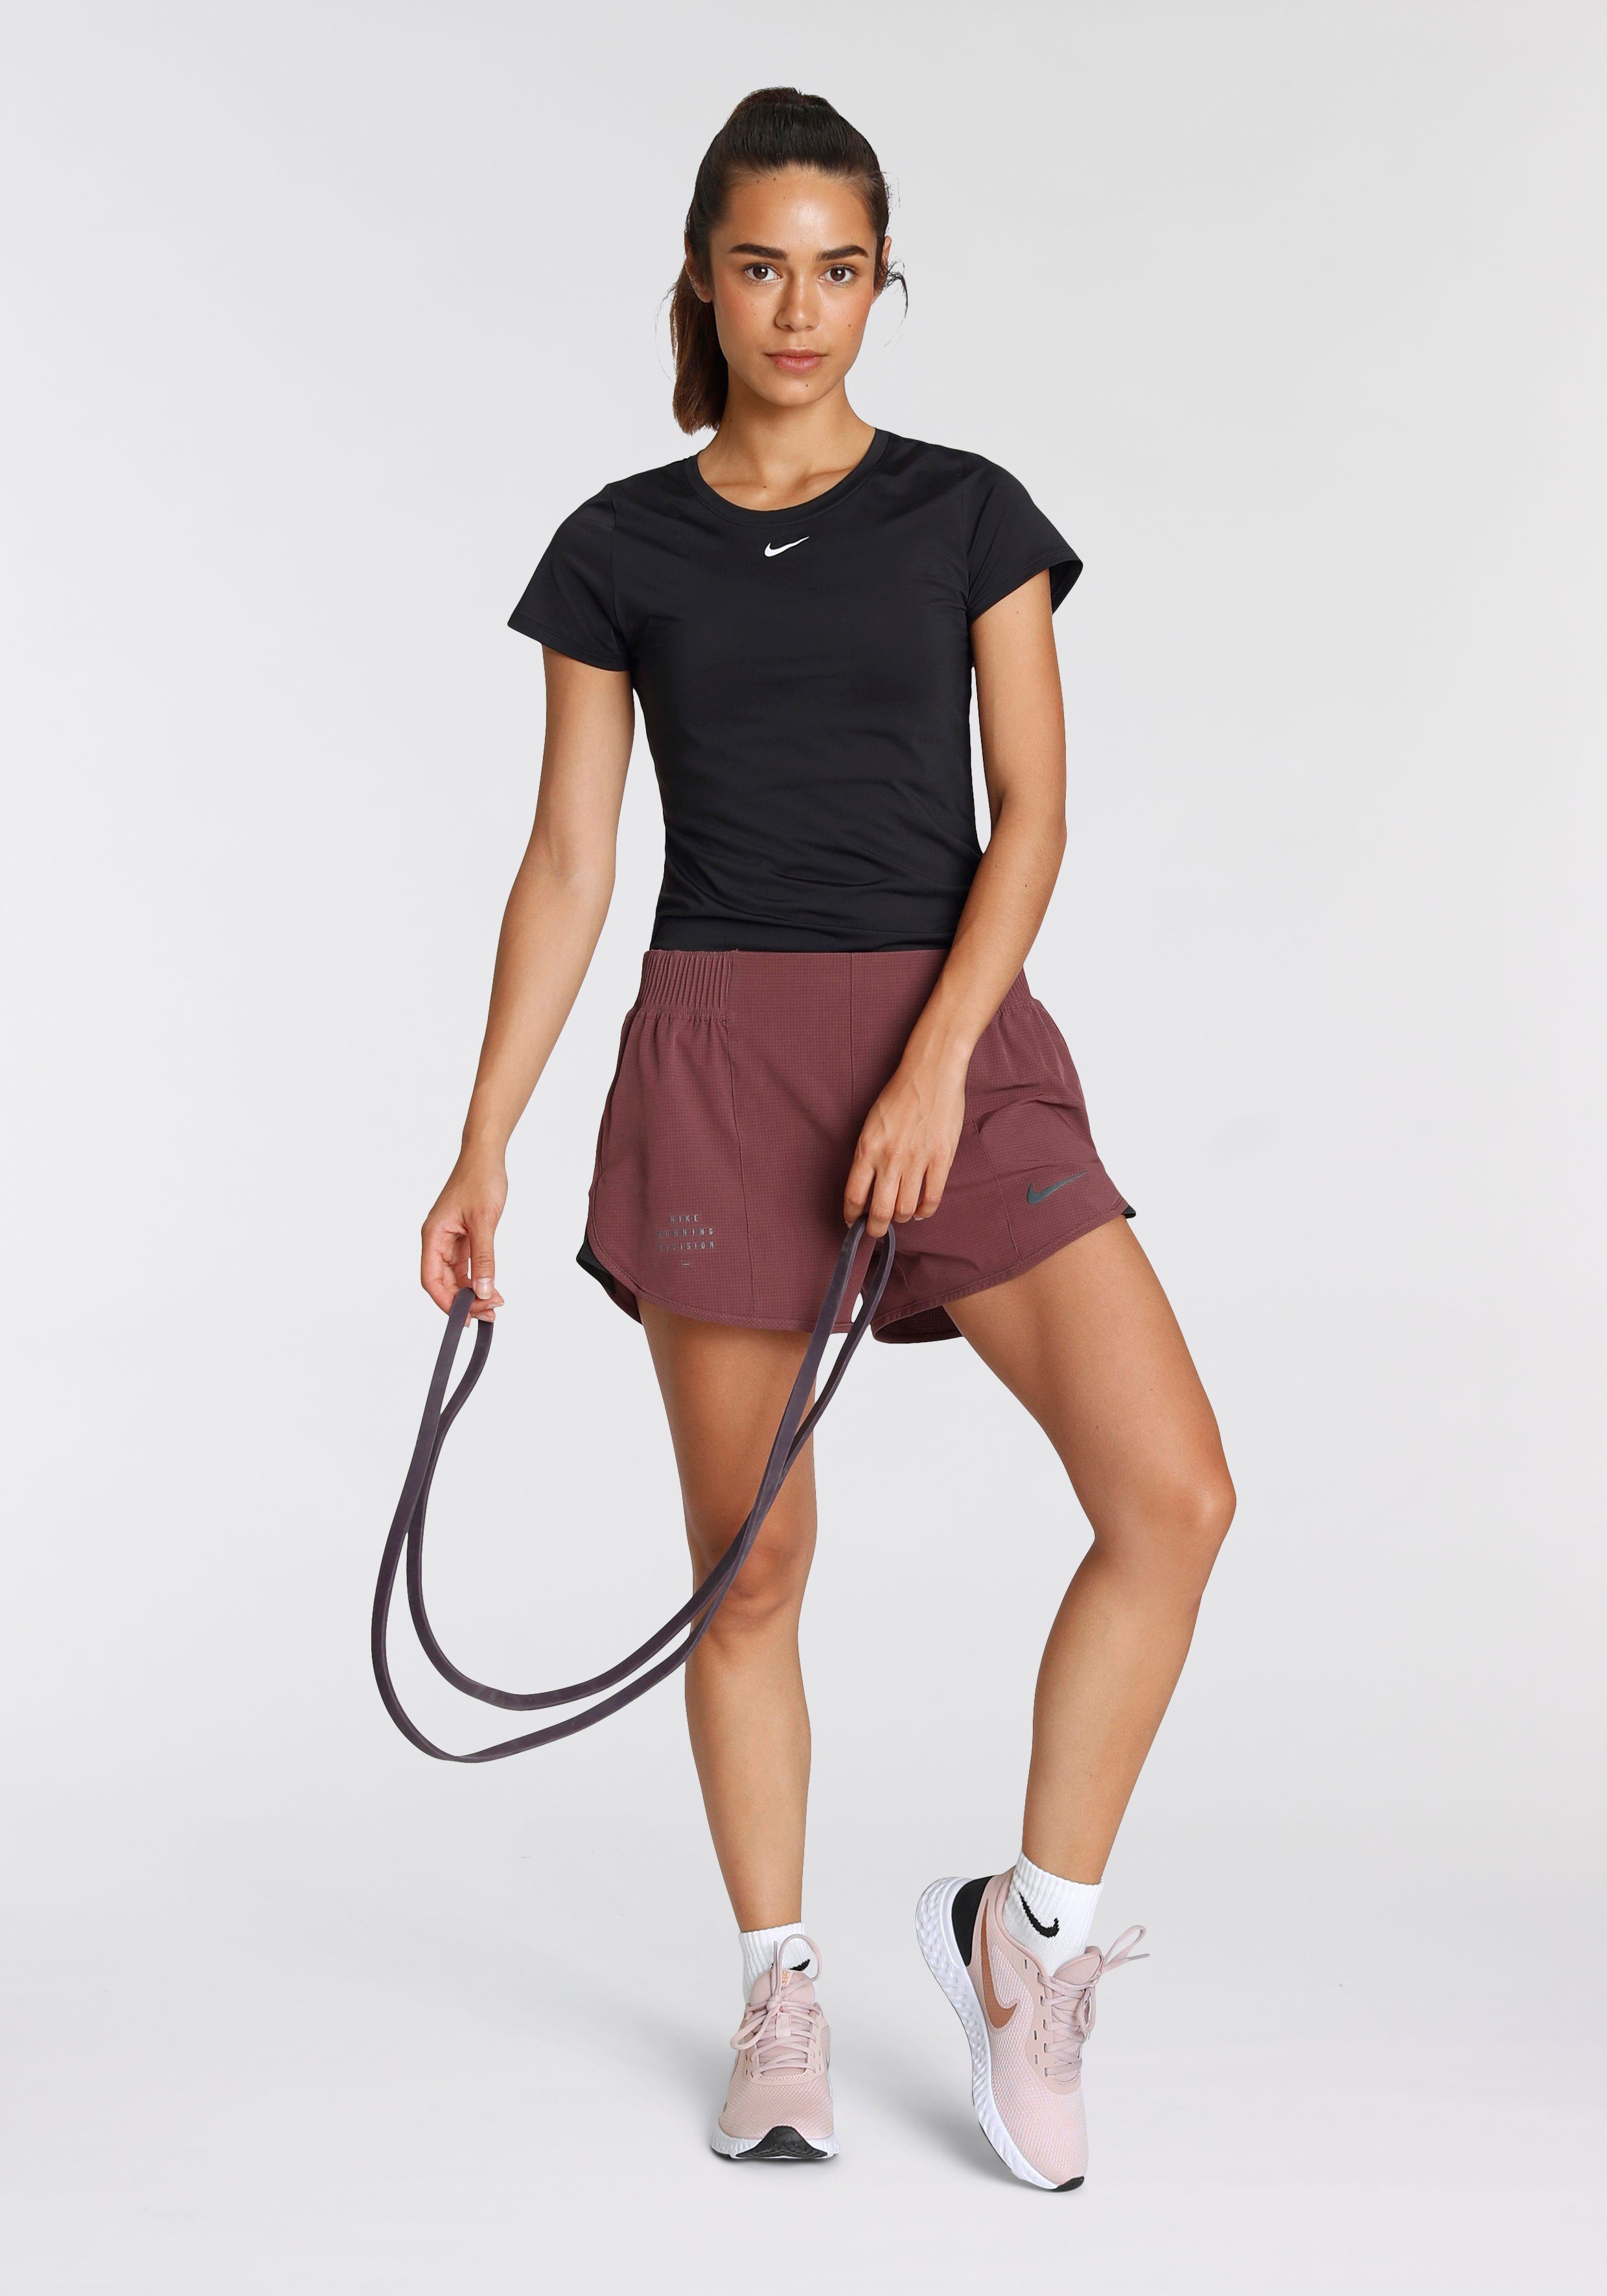 Trainingsshirt Nike schwarz TOP FIT SHORT-SLEEVE DRI-FIT WOMEN'S SLIM ONE